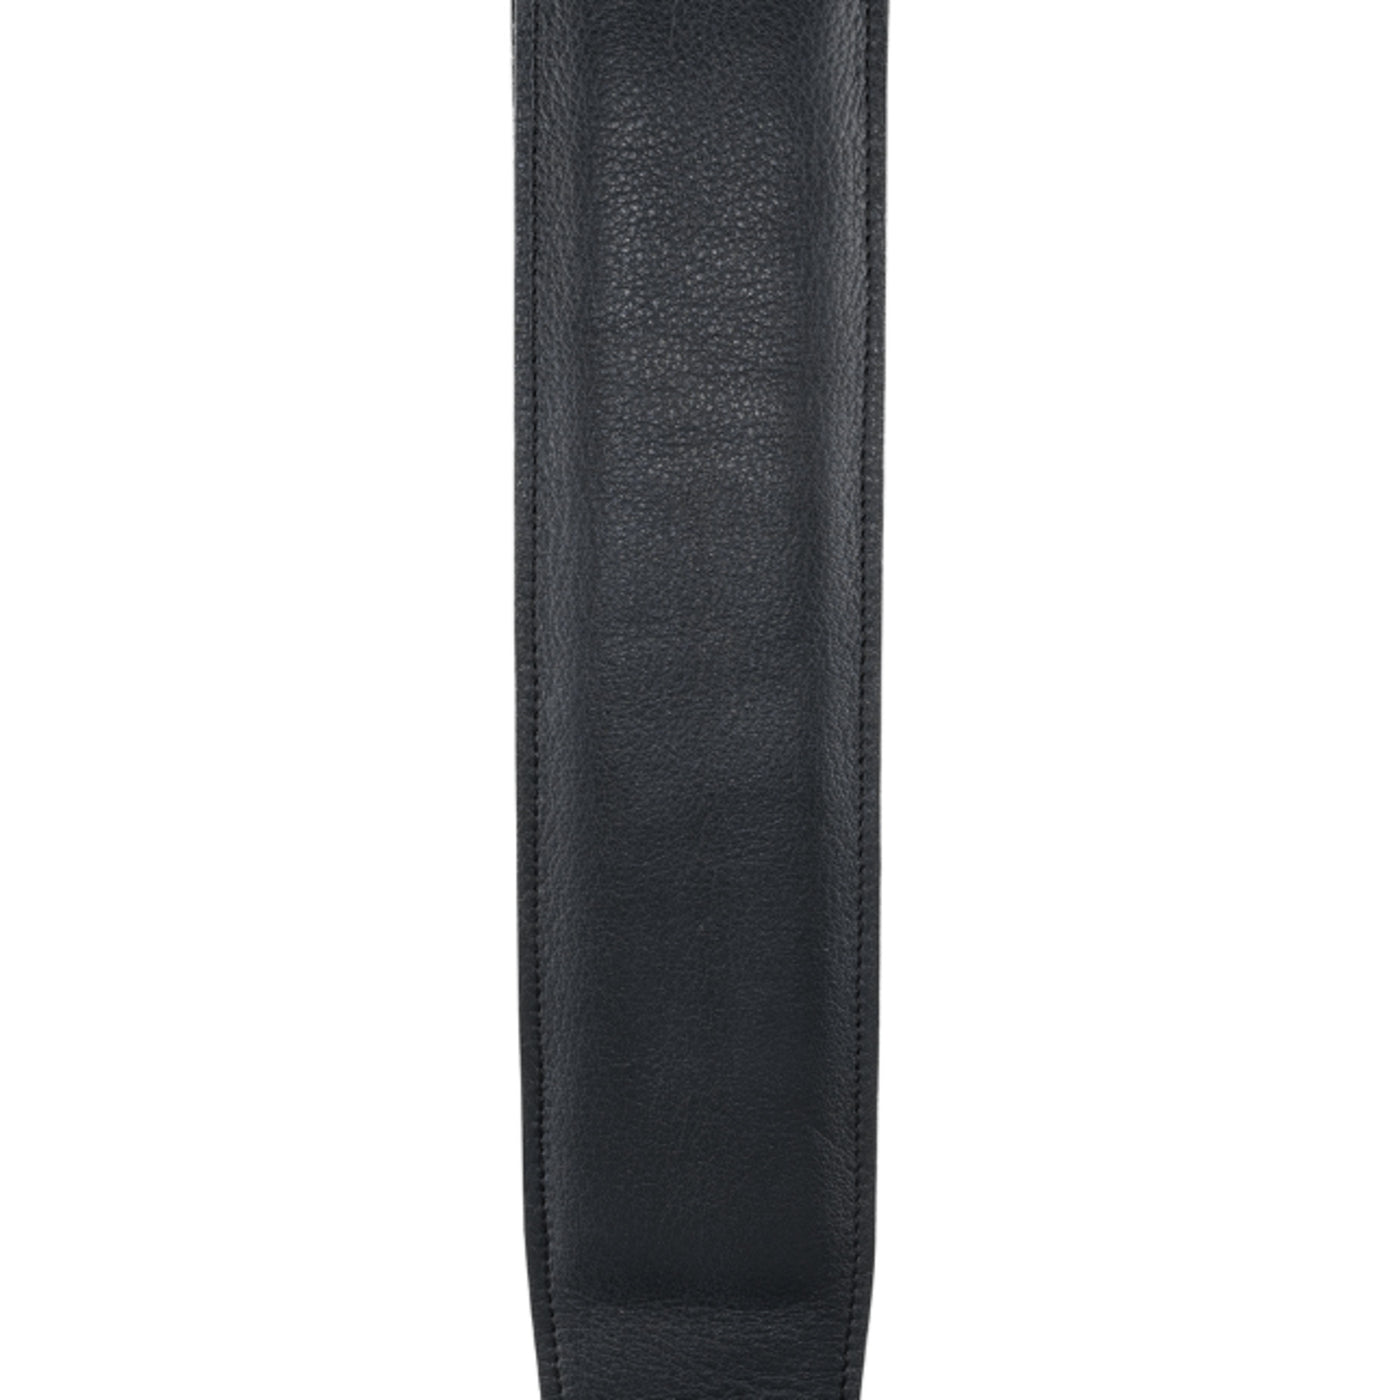 D'Addario Padded Garment Leather Guitar Strap, Black (25PLC01)